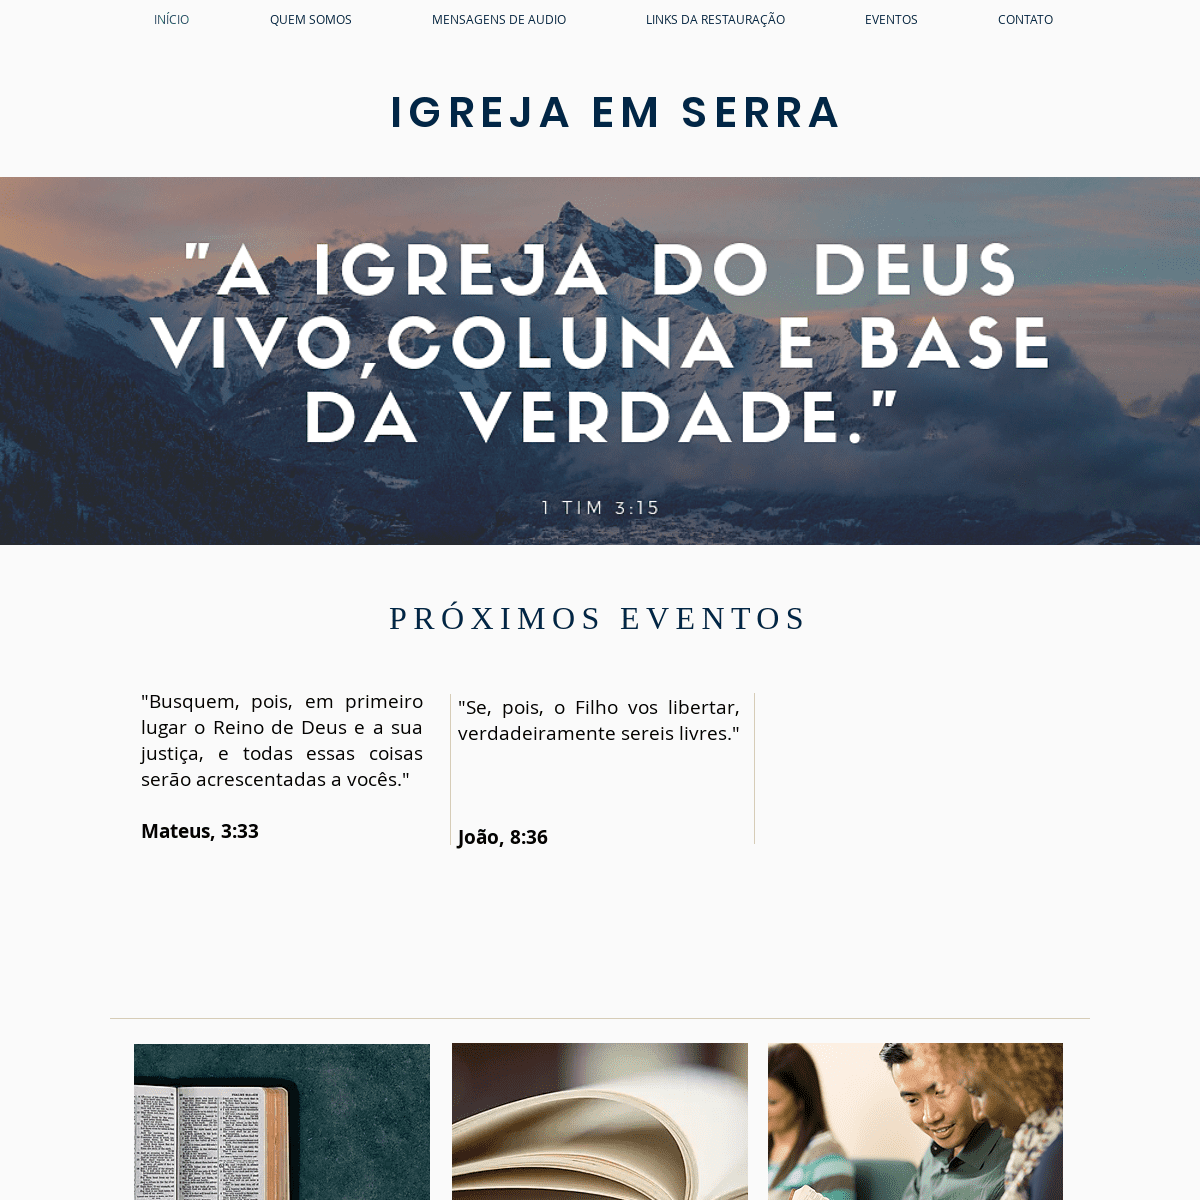 A complete backup of igrejaemserra.com.br